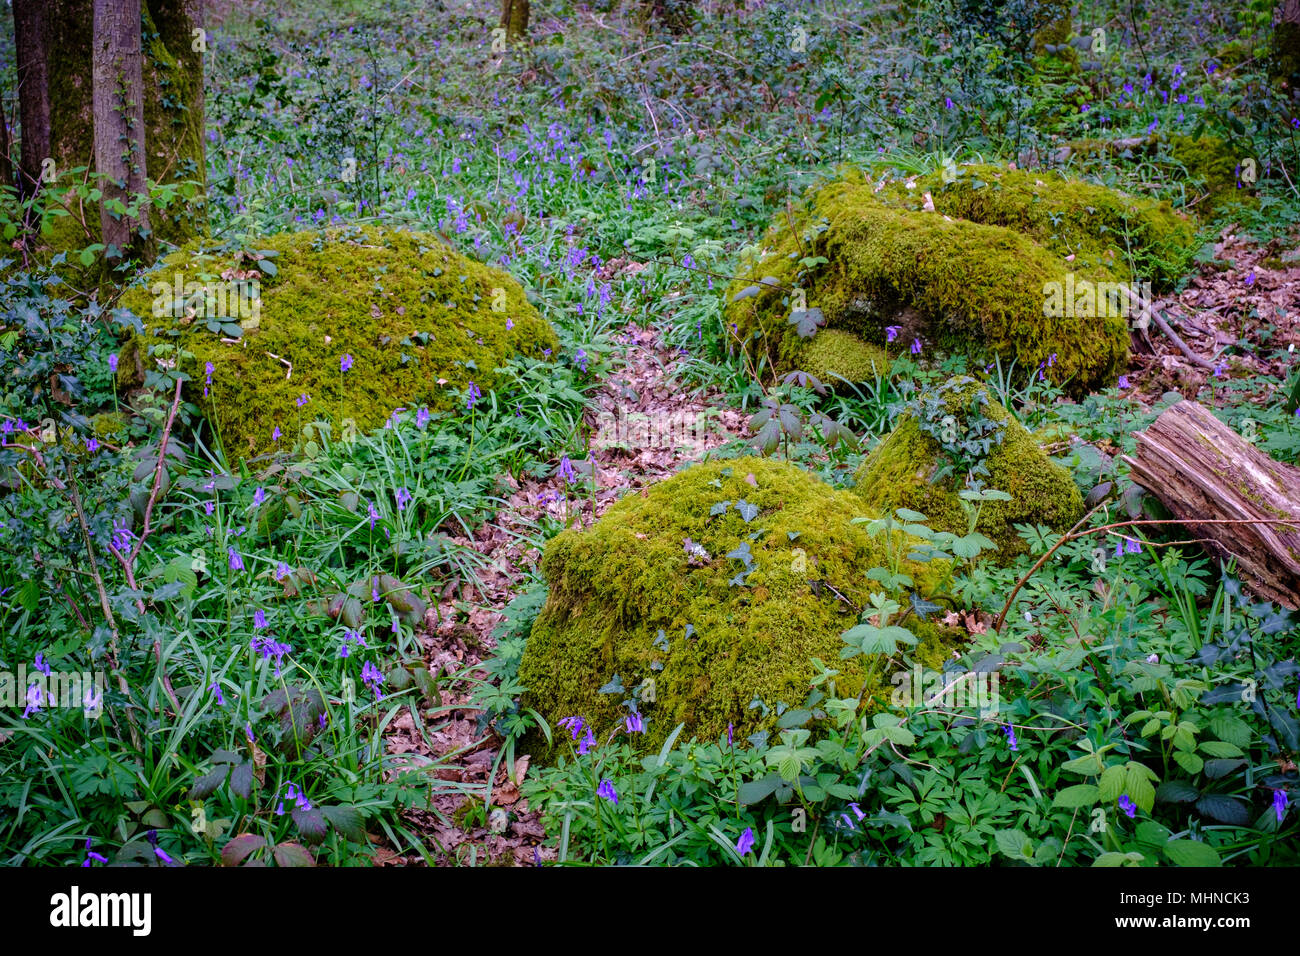 MOSS COVERED ROCKS IN WOODLAND, Bigsweir nature reserve GloucestershireEngland UK Stock Photo